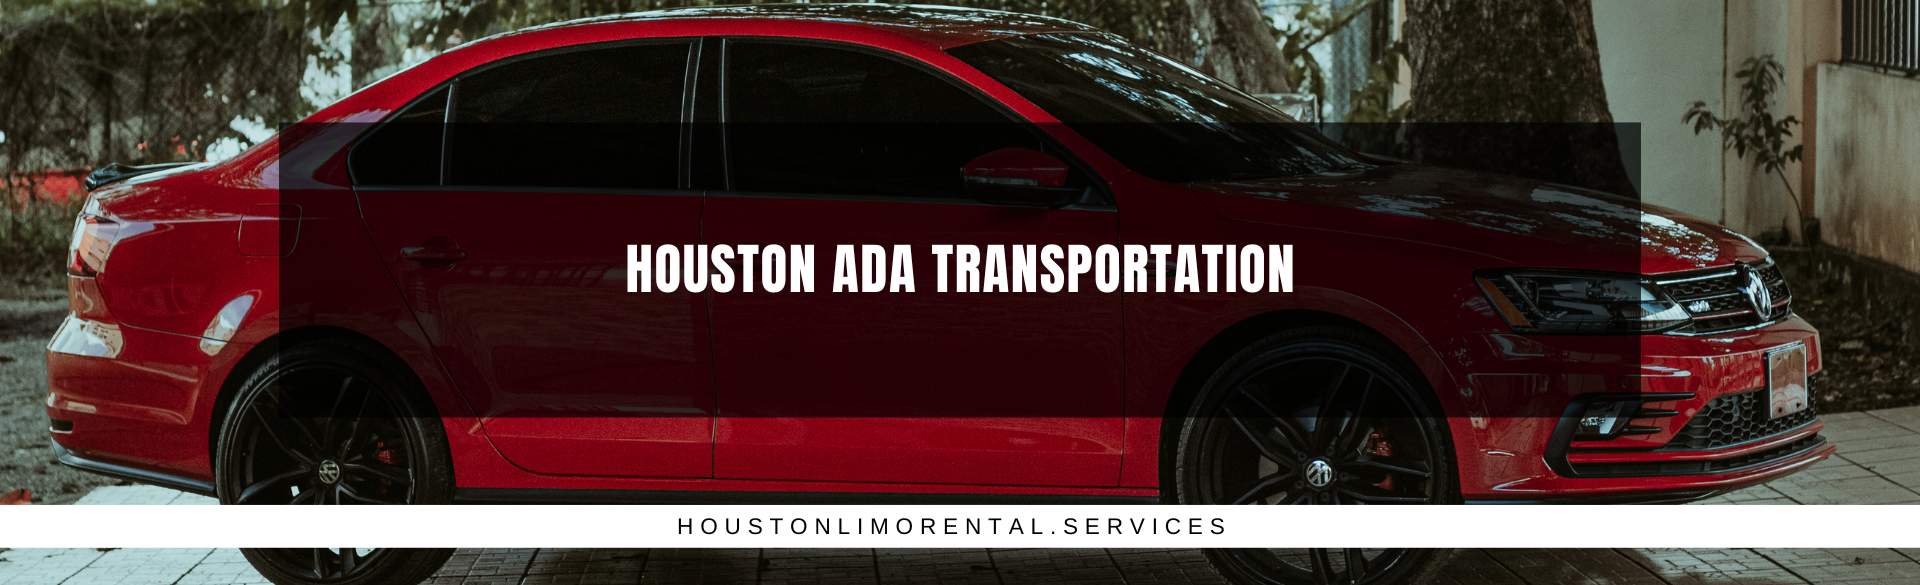 Houston ADA transportation